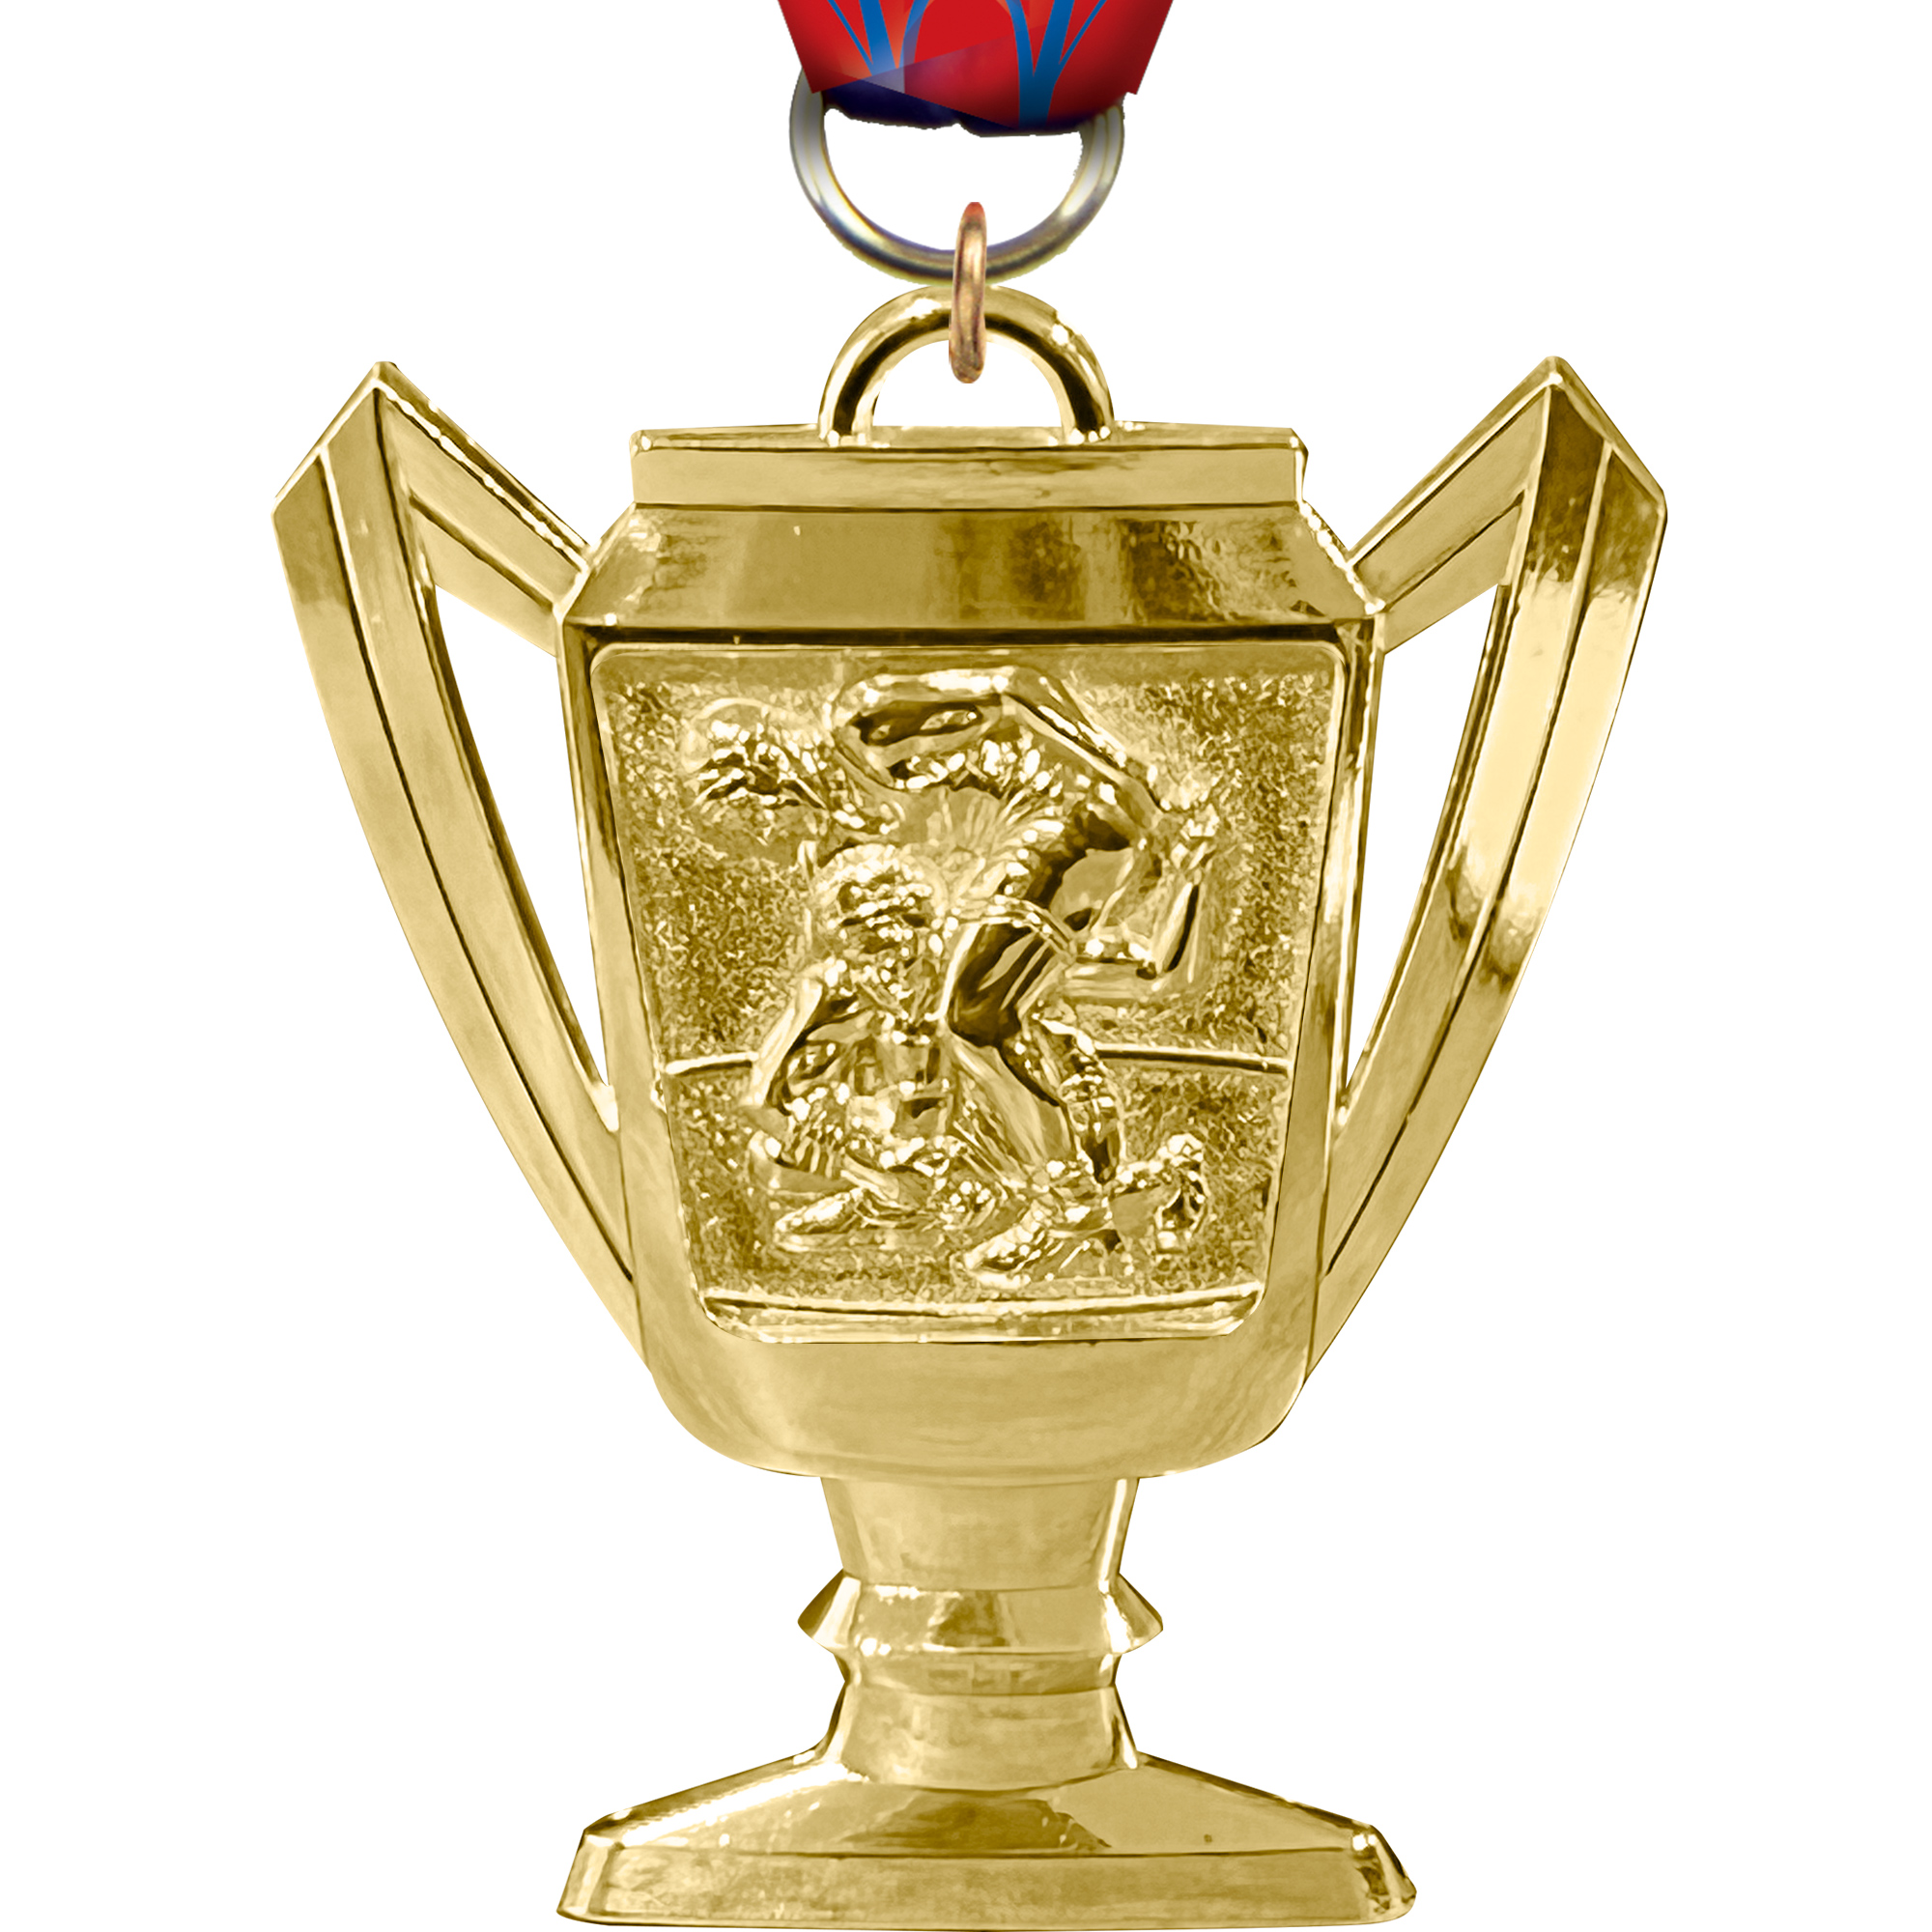 Wrestling Bright Gold Trophy Cup Medal